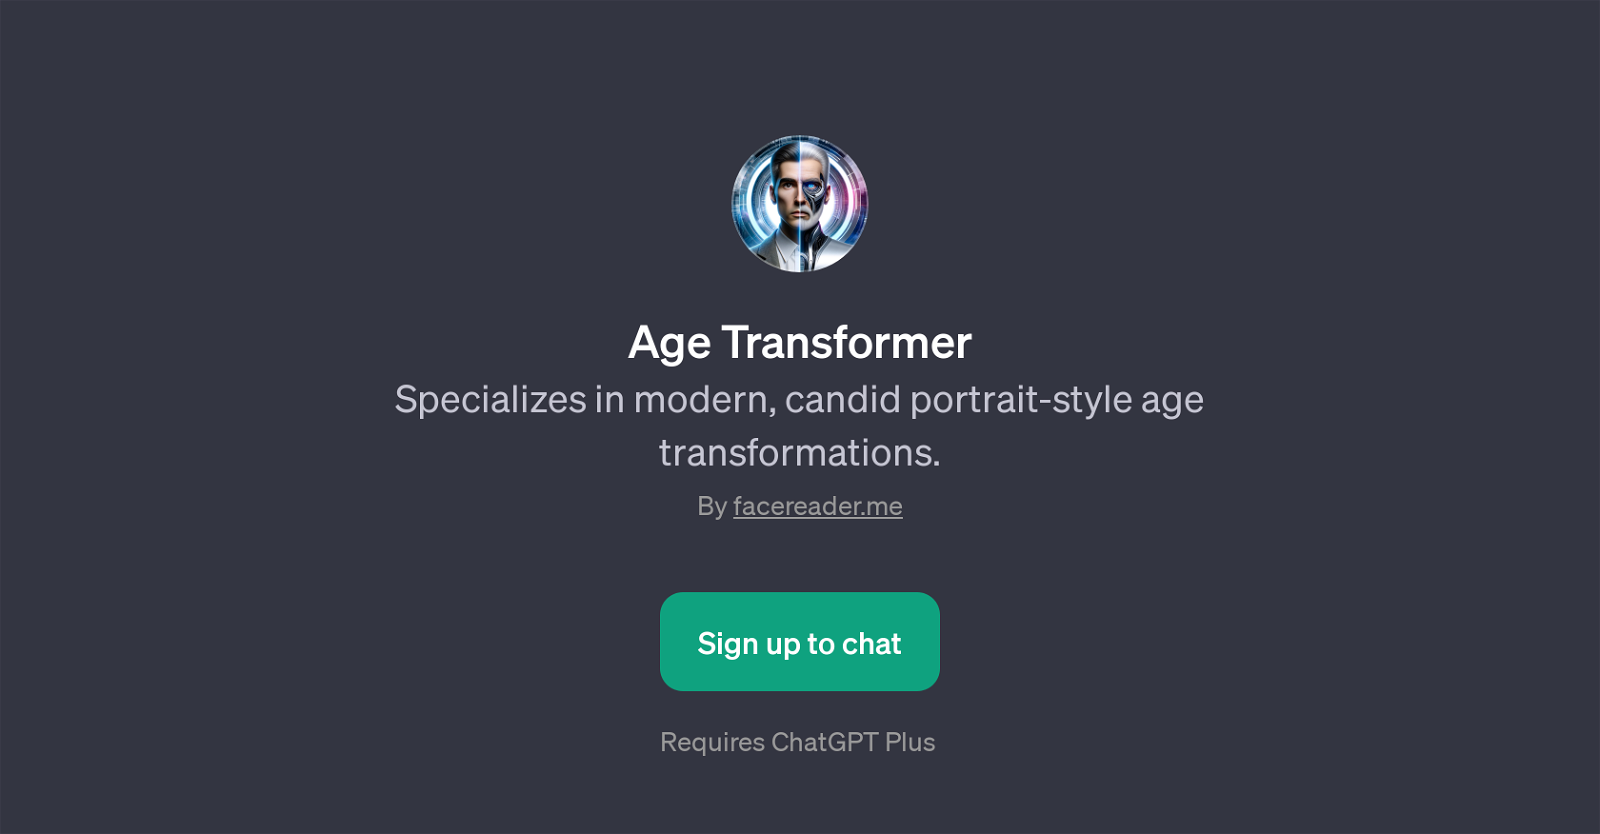 Age Transformer website